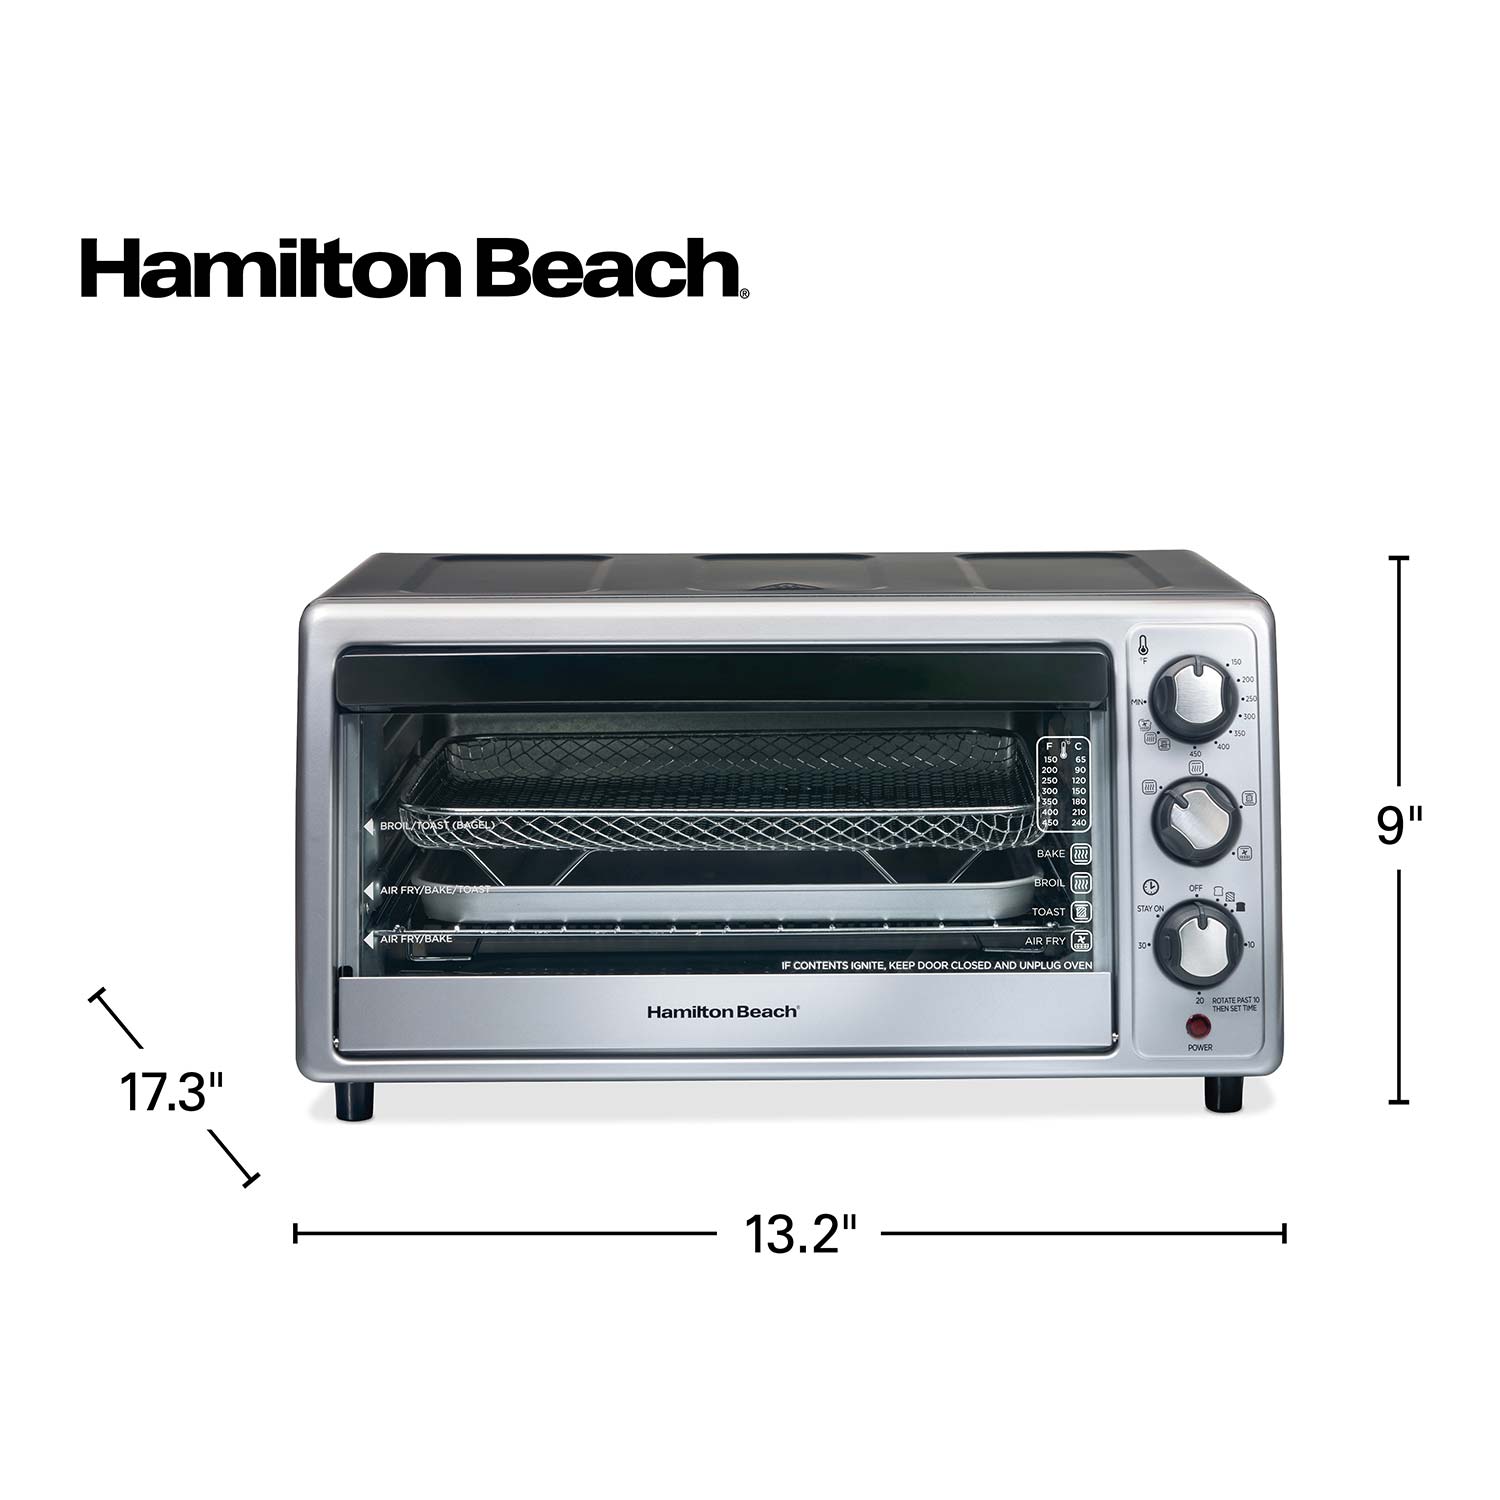 Hamilton Beach Professional Sure-Crisp Digital Toaster Oven Air Fryer  Combo, 1500W, 6 Slice Capacity, Stainless Steel (31241)